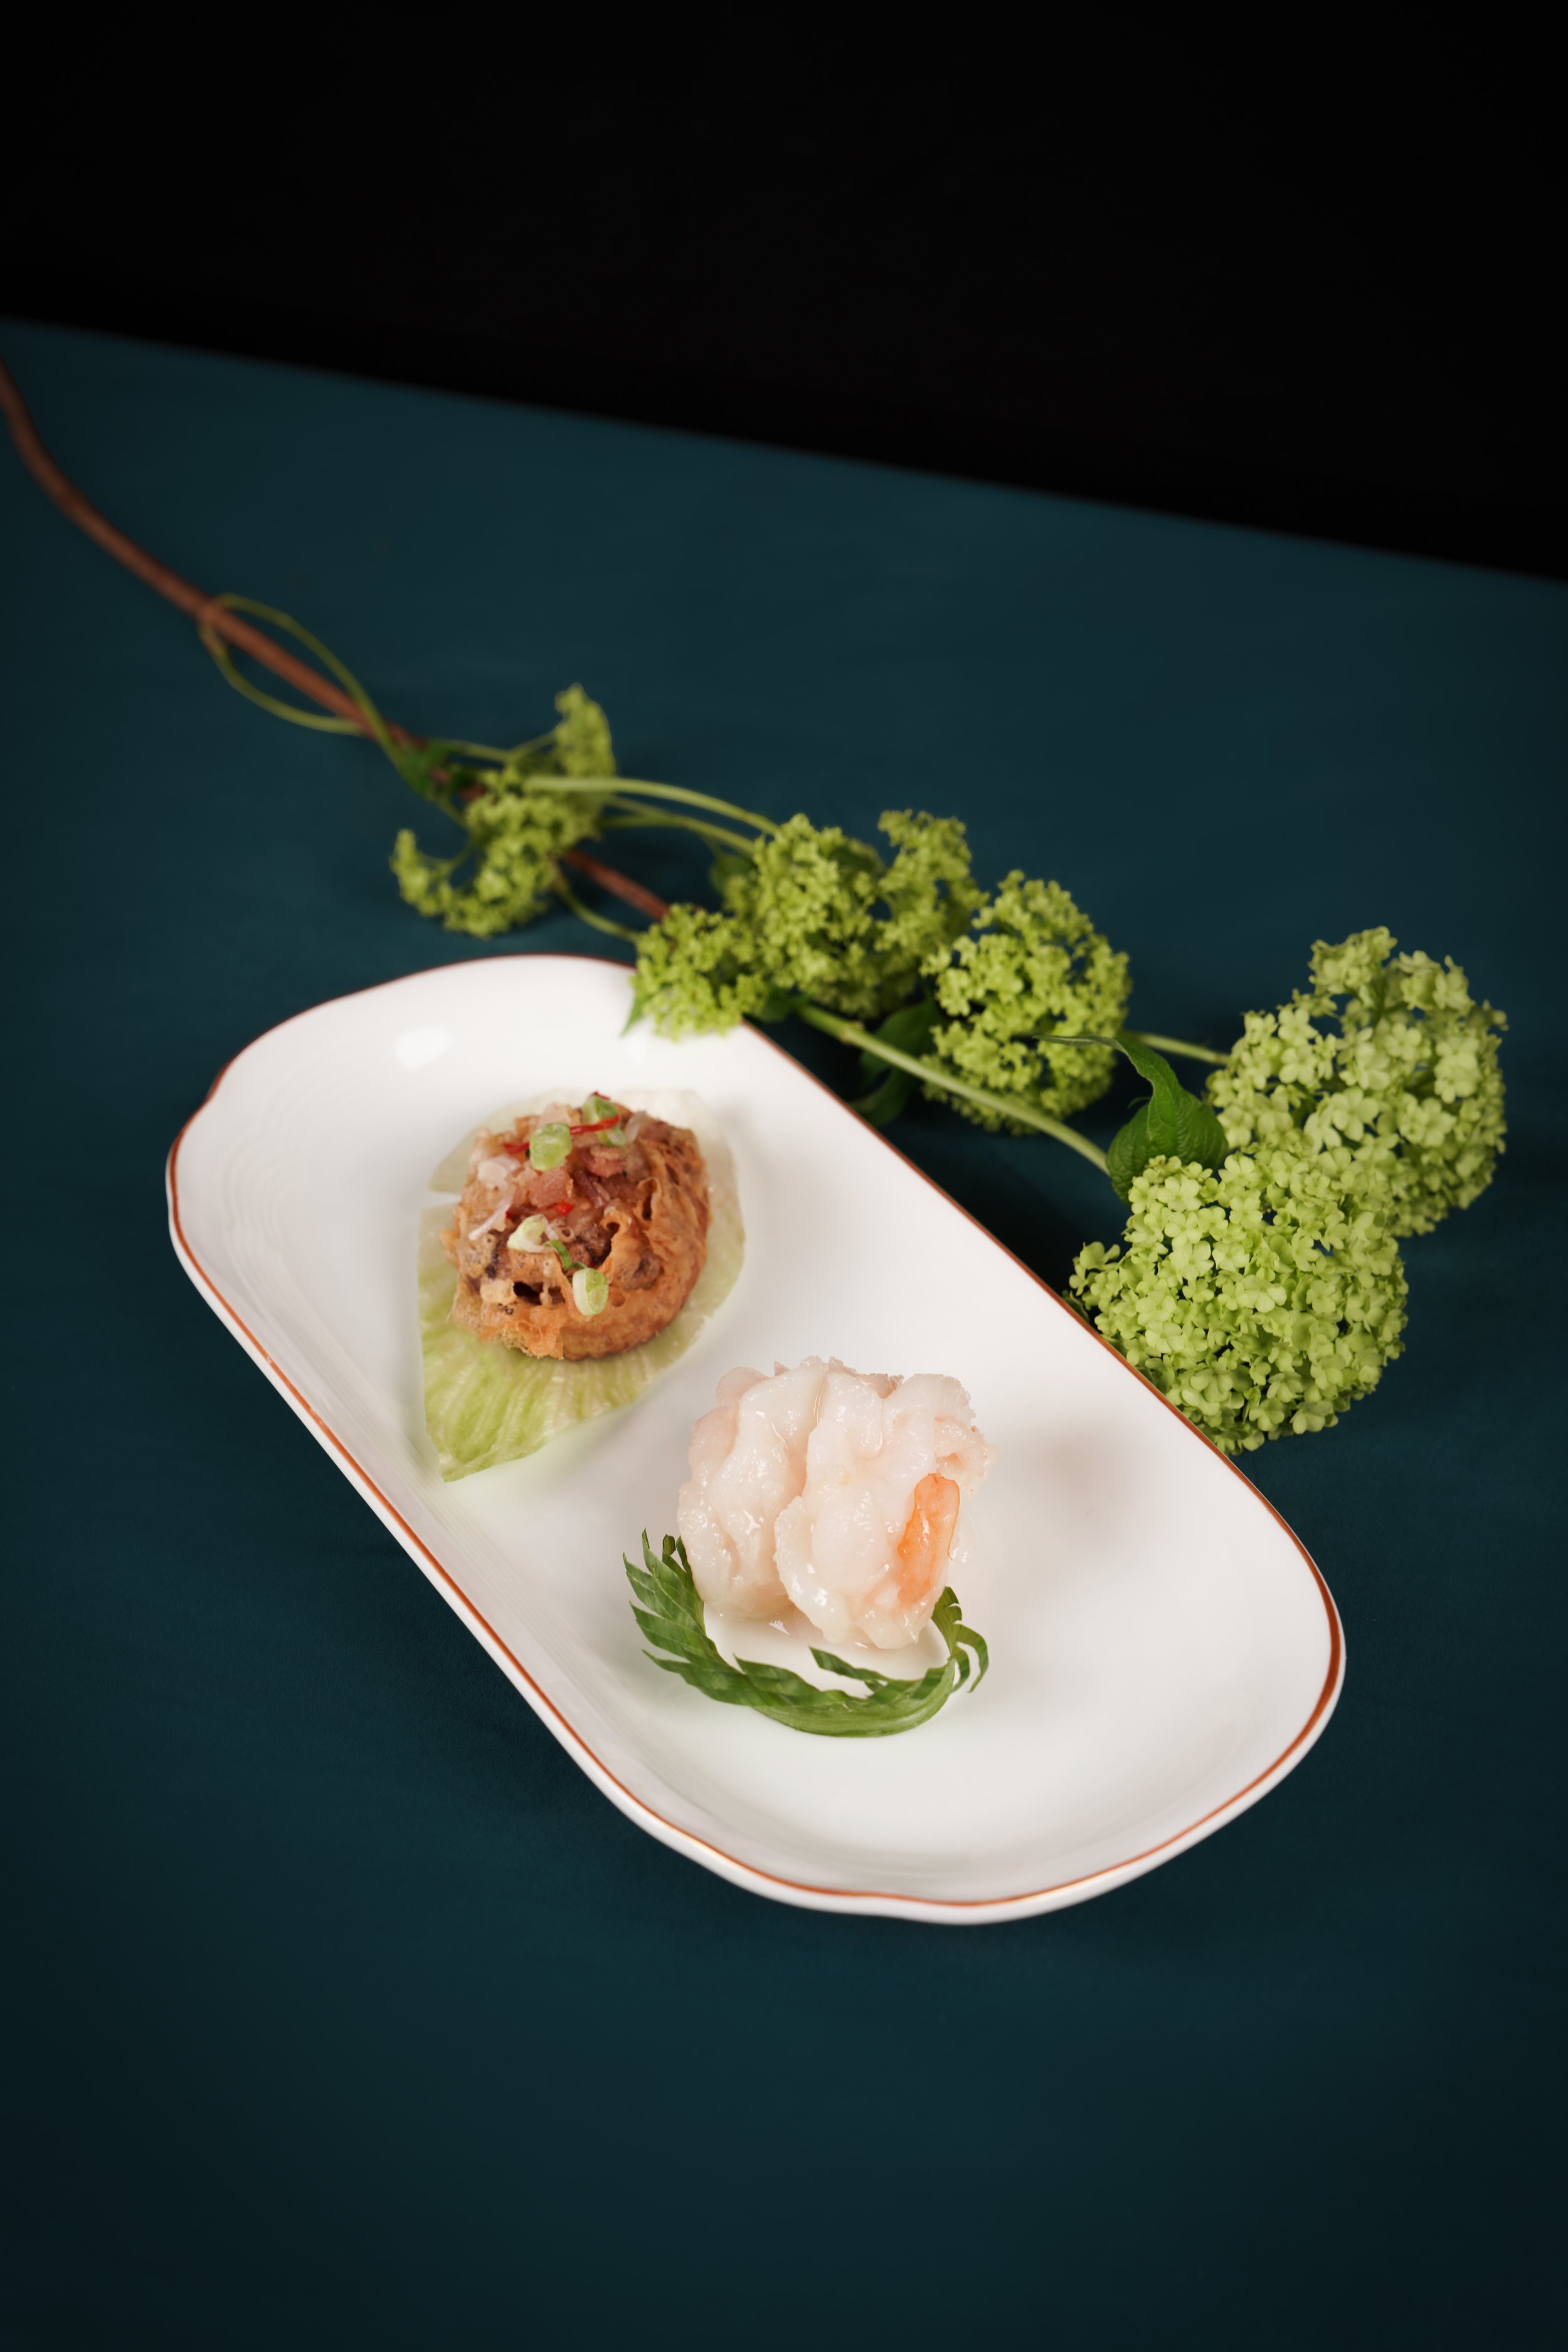 Sautéed Prawn and Fried Oyster with Seven Spices 玻璃蝦球伴七味金蠔.jpg